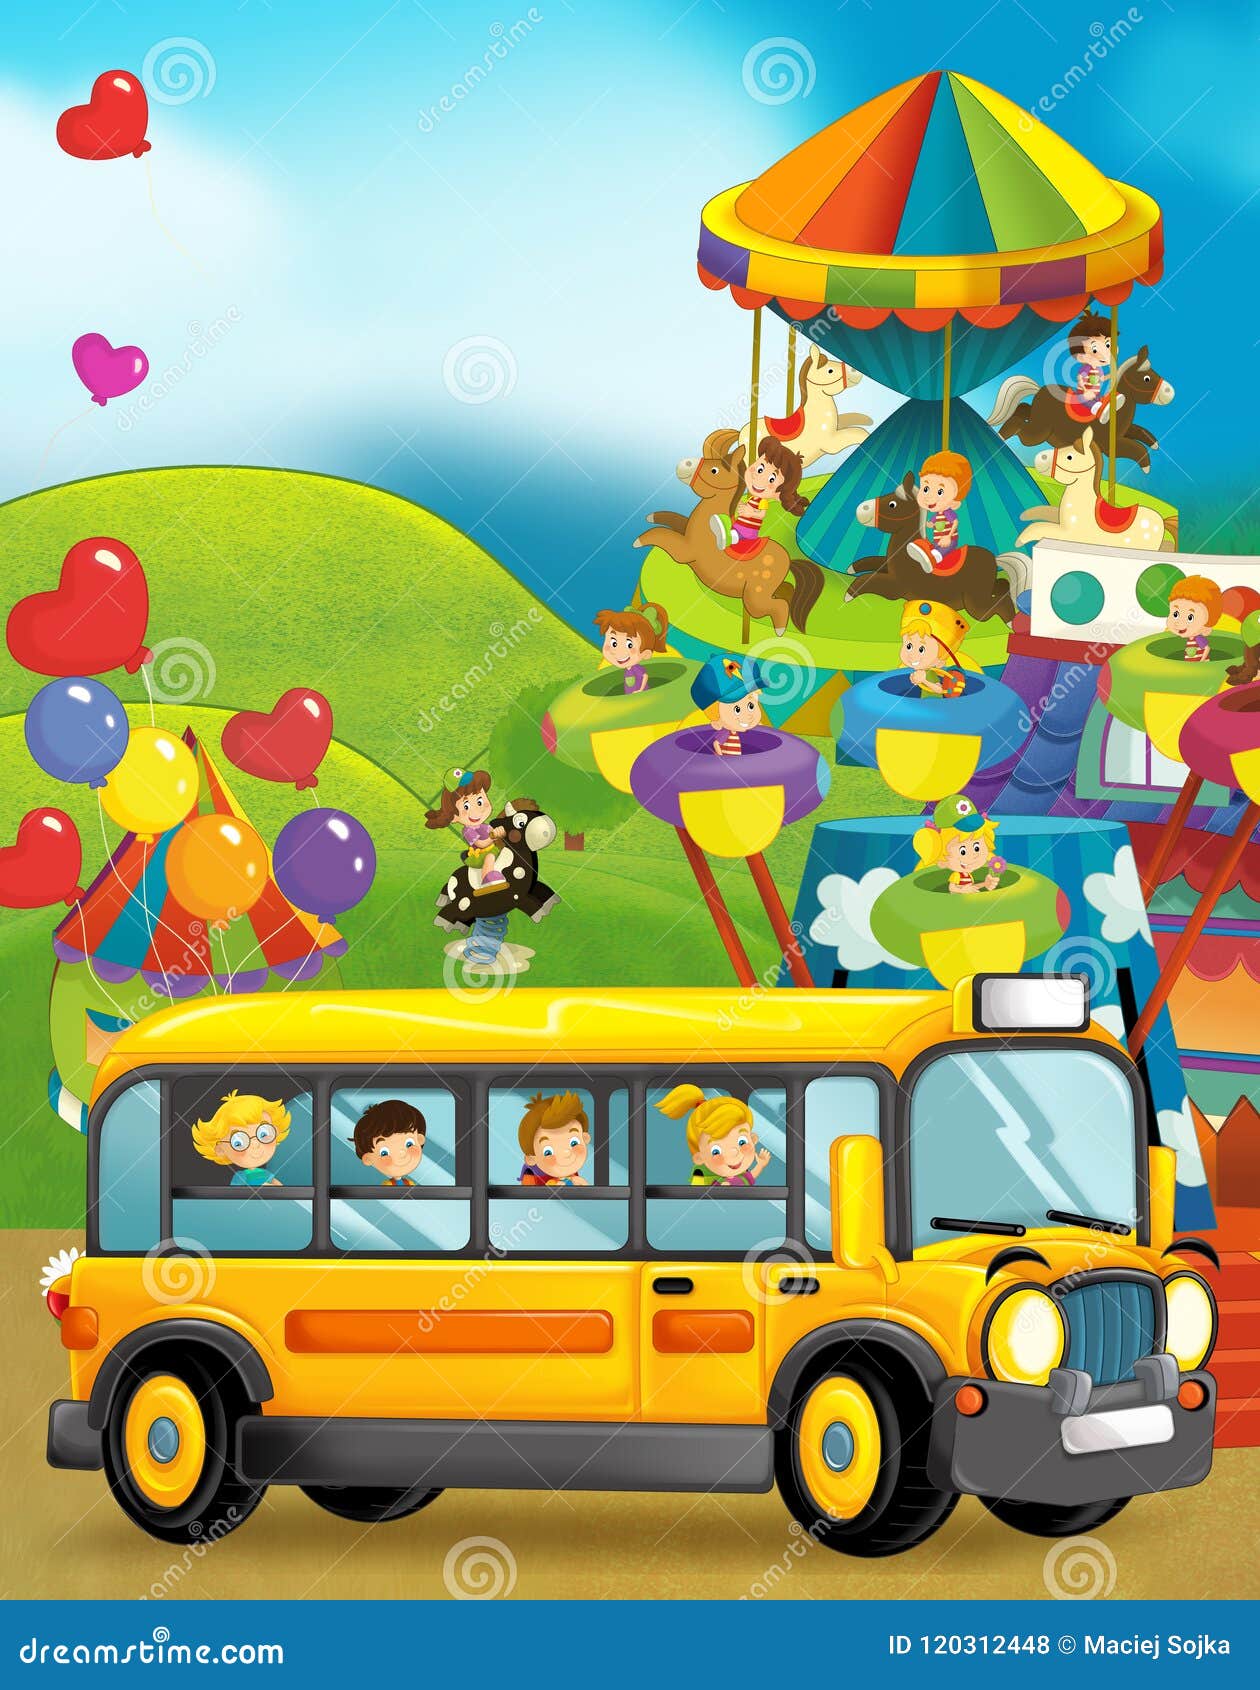 bus trip cartoon images